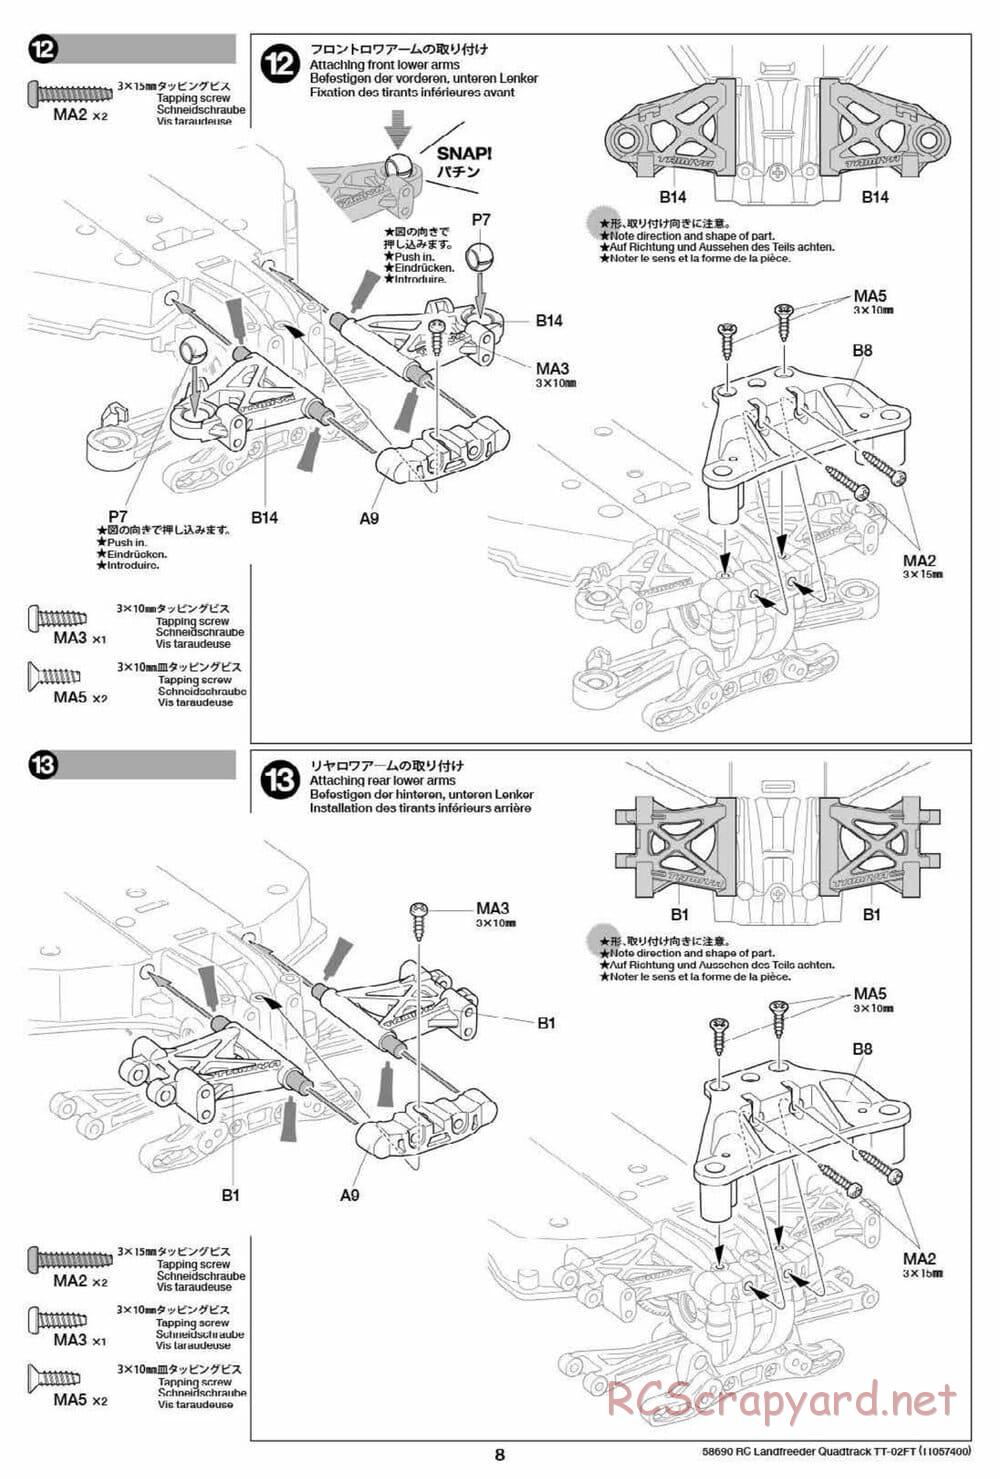 Tamiya - Landfreeder Quadtrack - TT-02FT Chassis - Manual - Page 8